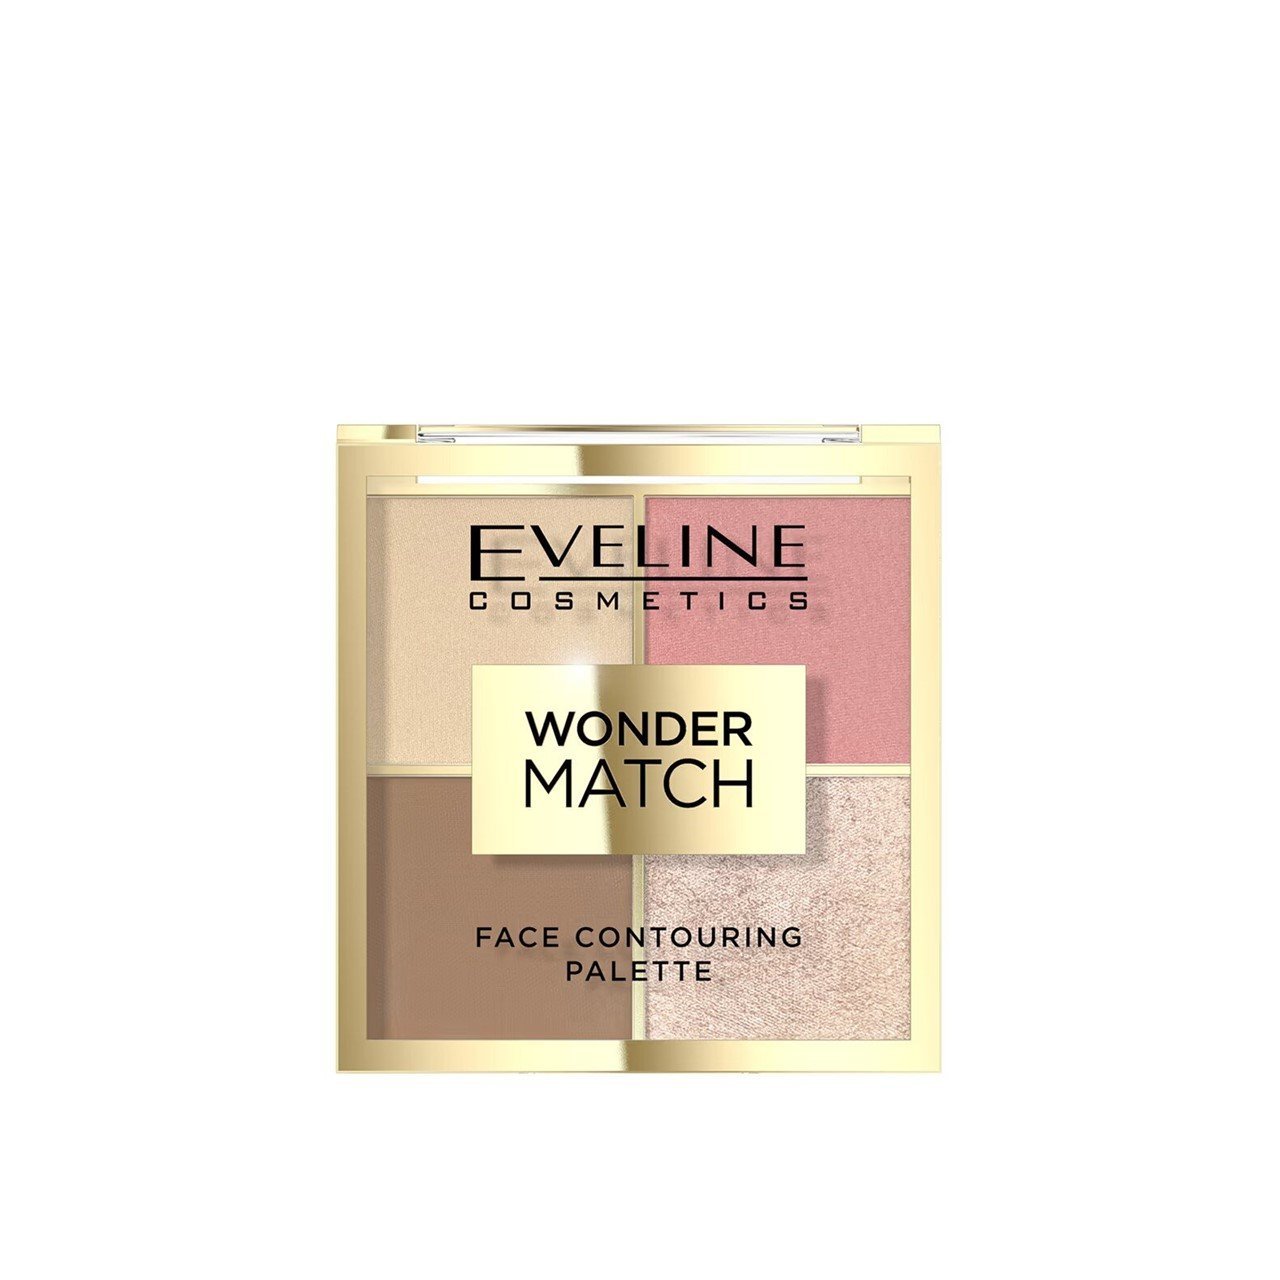 Eveline Cosmetics Wonder Match Face Contouring Palette 02 10.8g